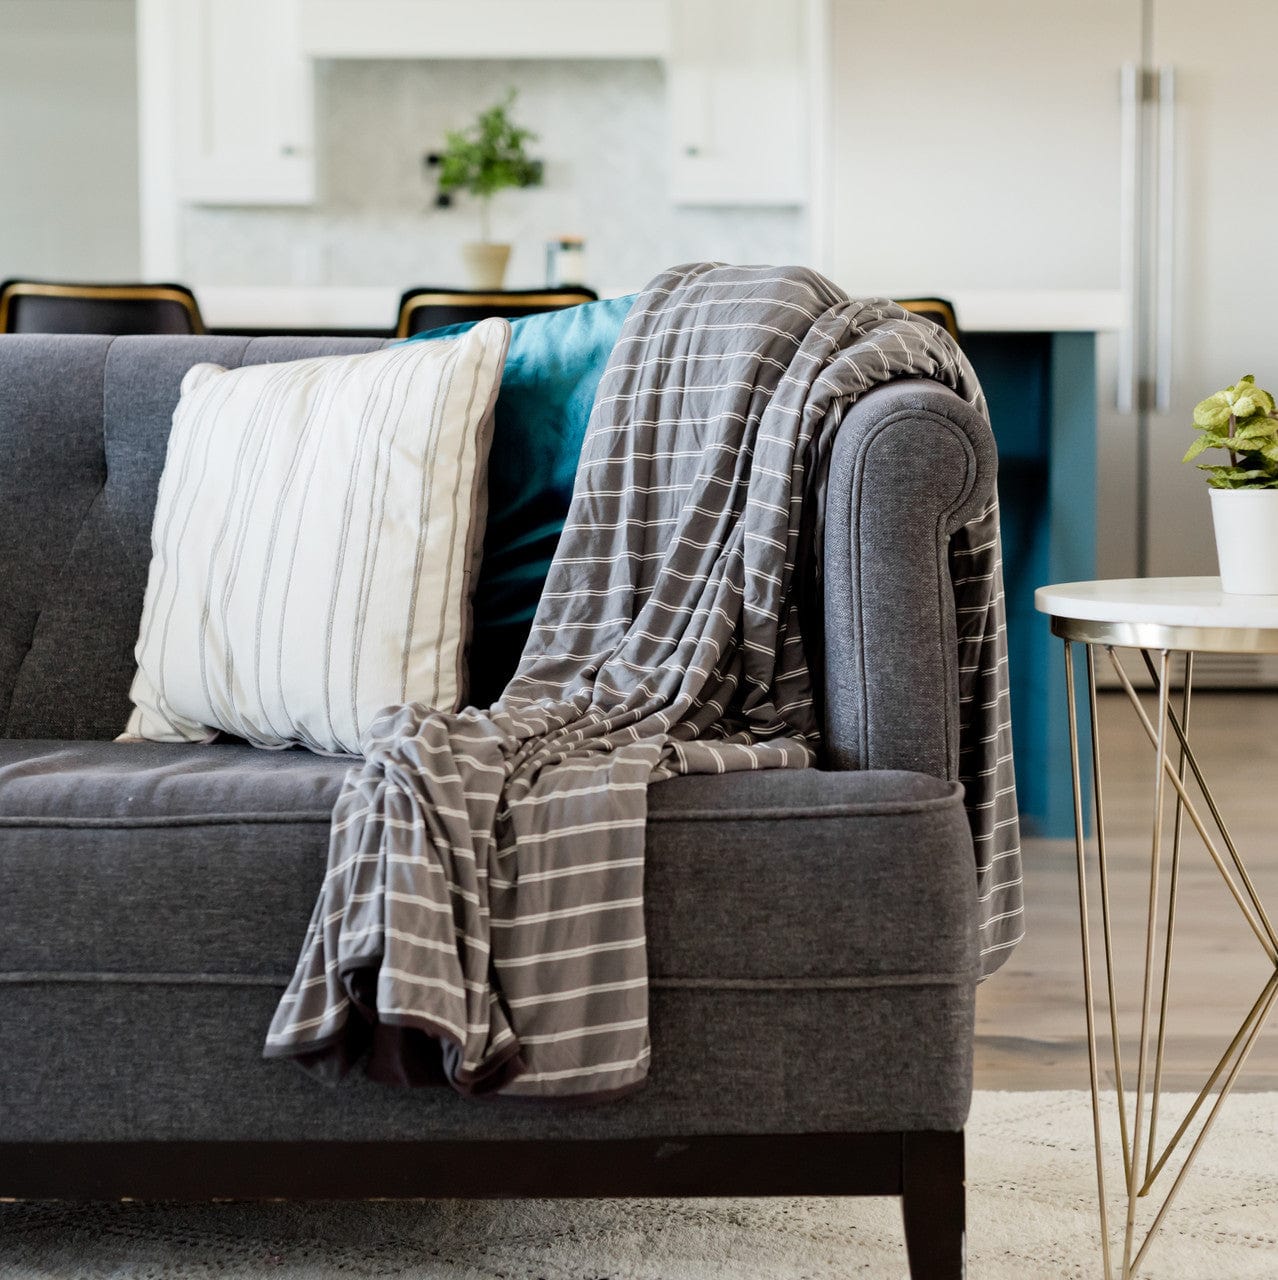 Couch blanket grey striped, neutral color blanket, mdoern aesthetic, best luxury balnket, comfy cozy bedroom.